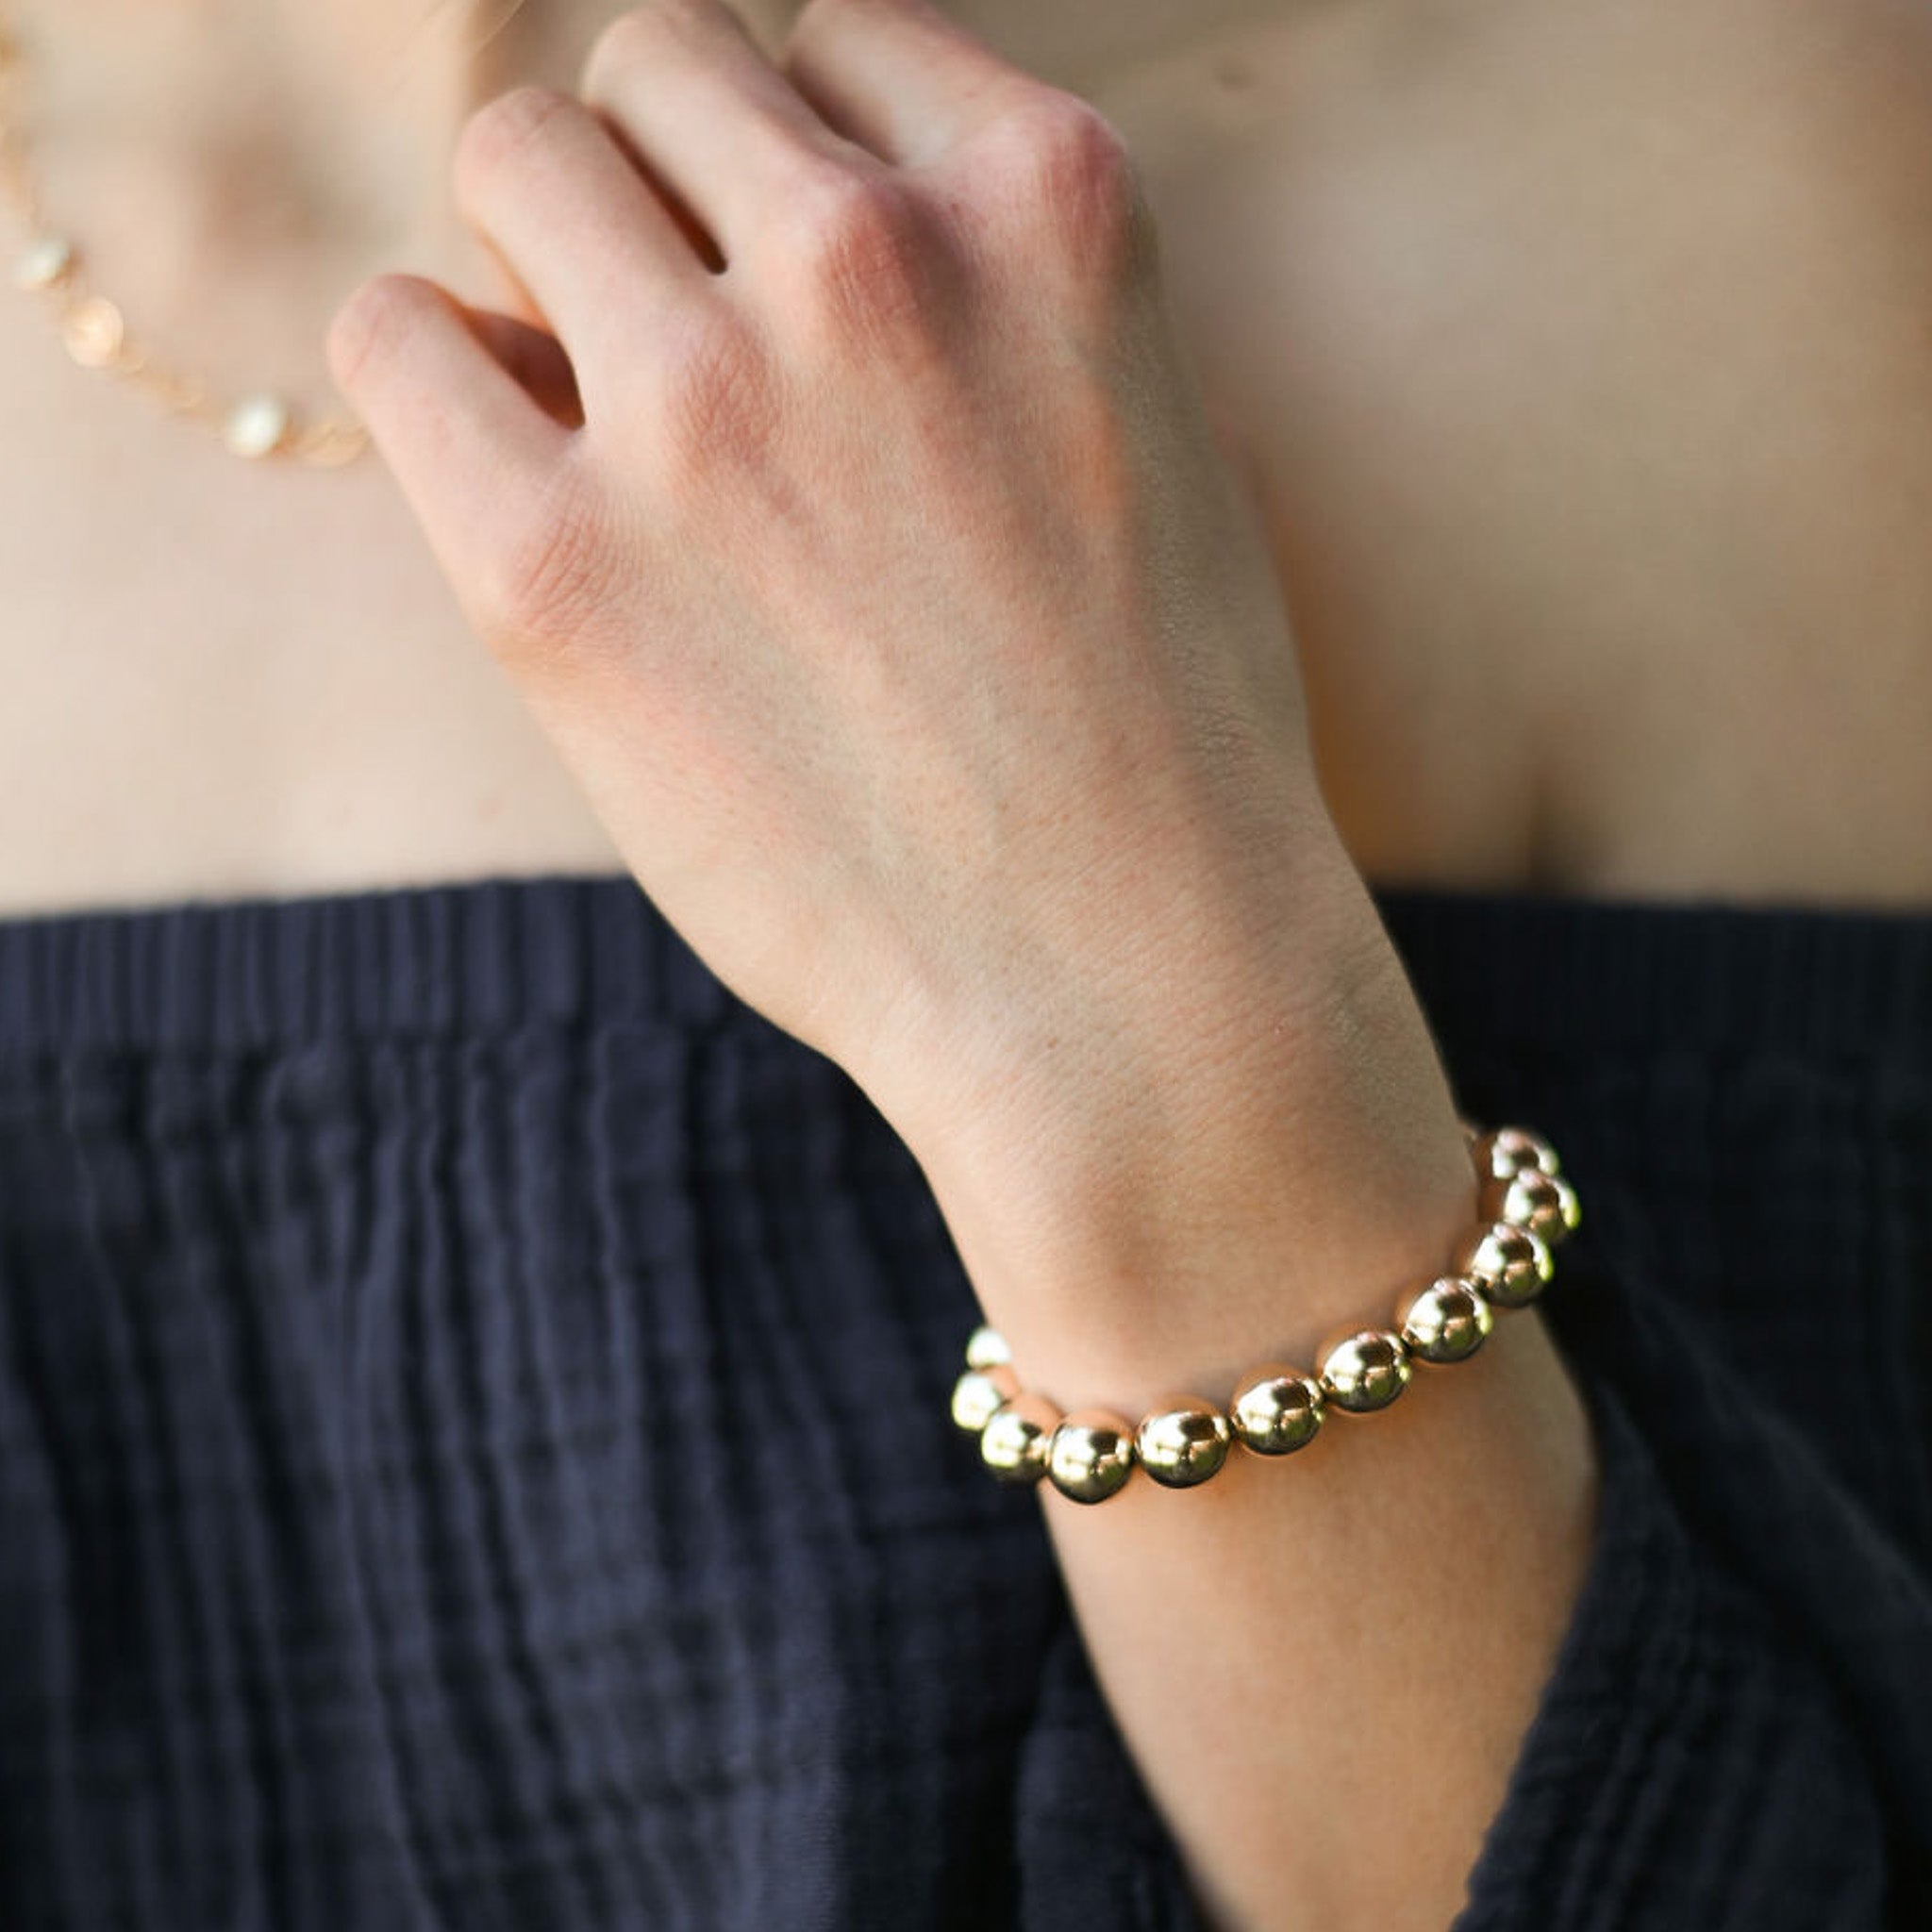 10mm 14k Gold Filled Beaded Bracelet - Jewel Ya